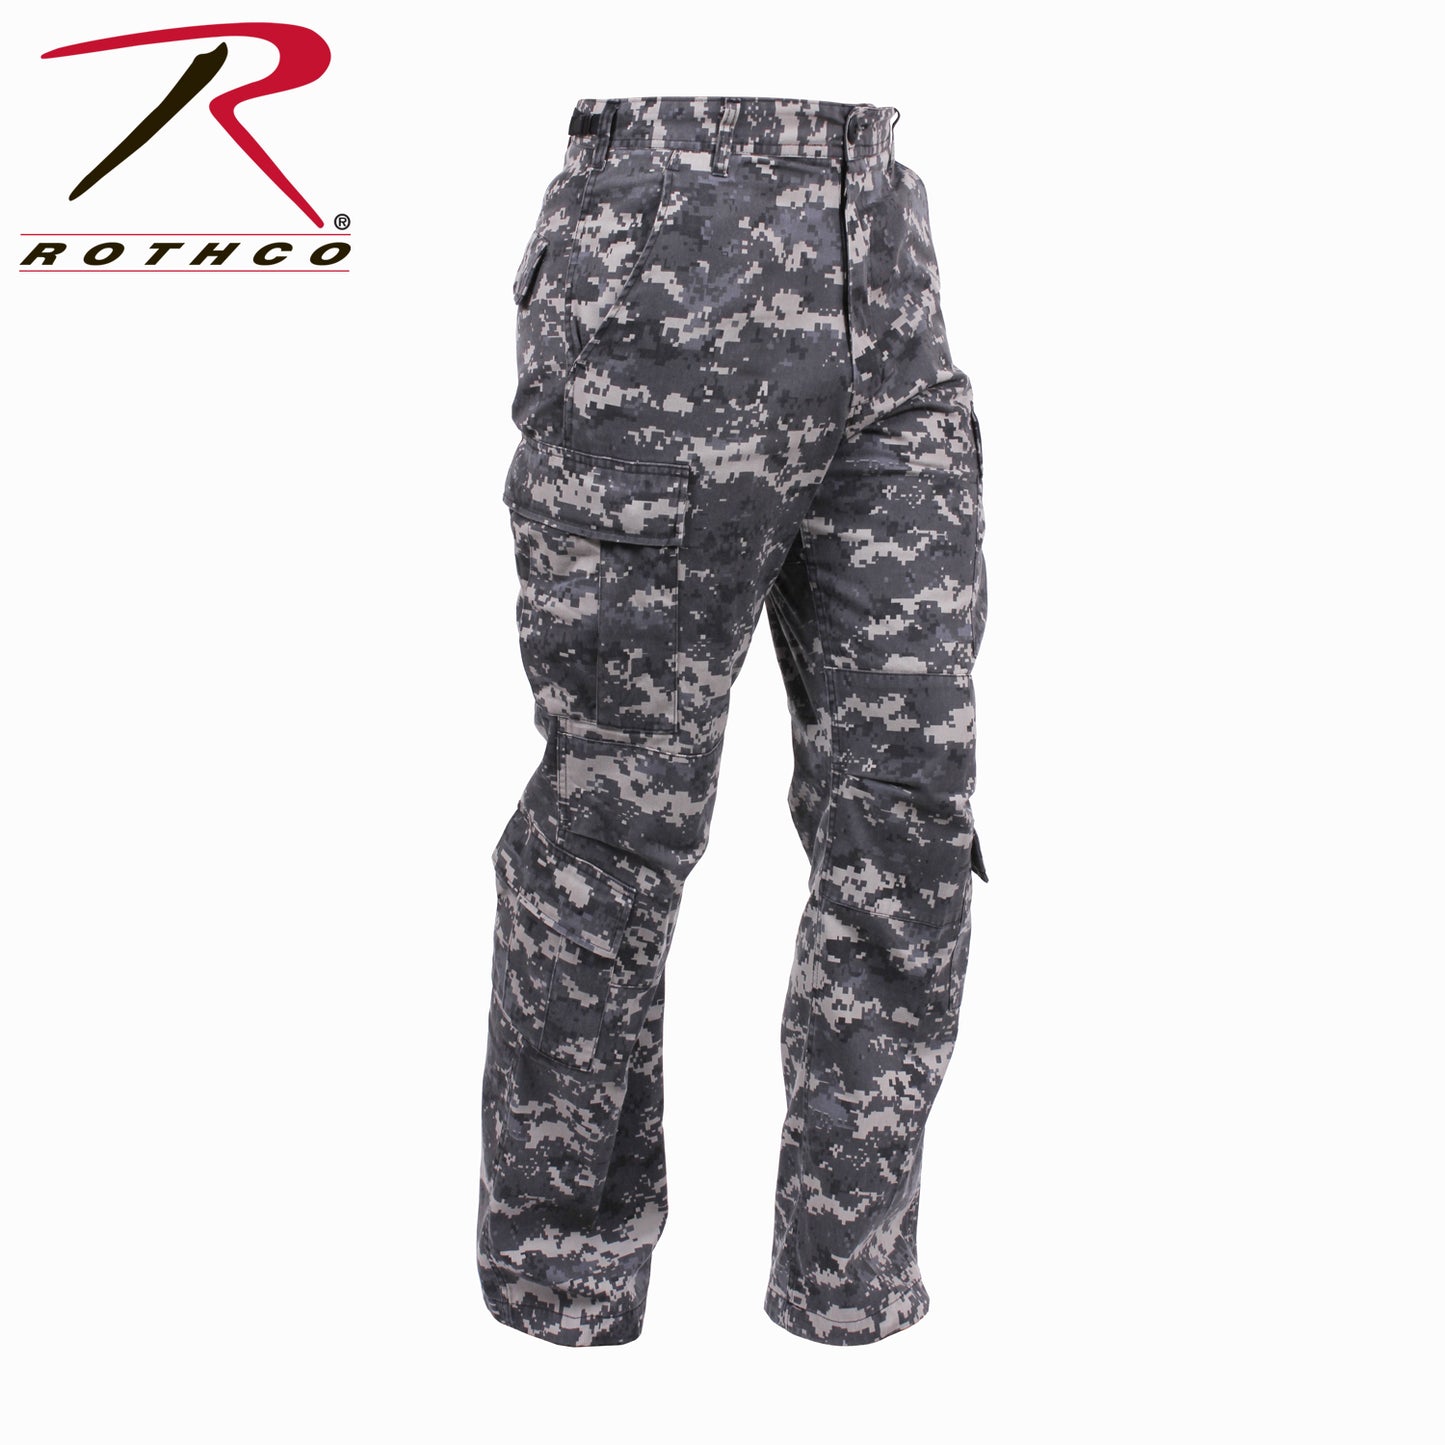 Camo Paratrooper Fatigue Pants, Vintage Style